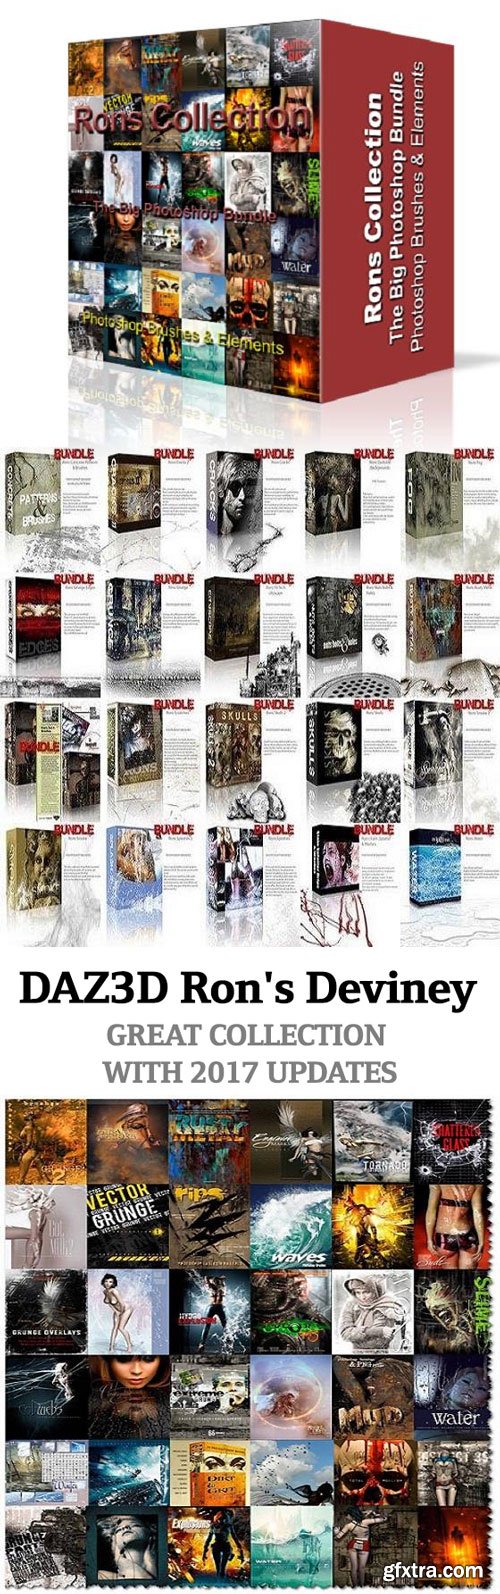 DAZ3D Ron\'s Deviney Collection 2017 Update